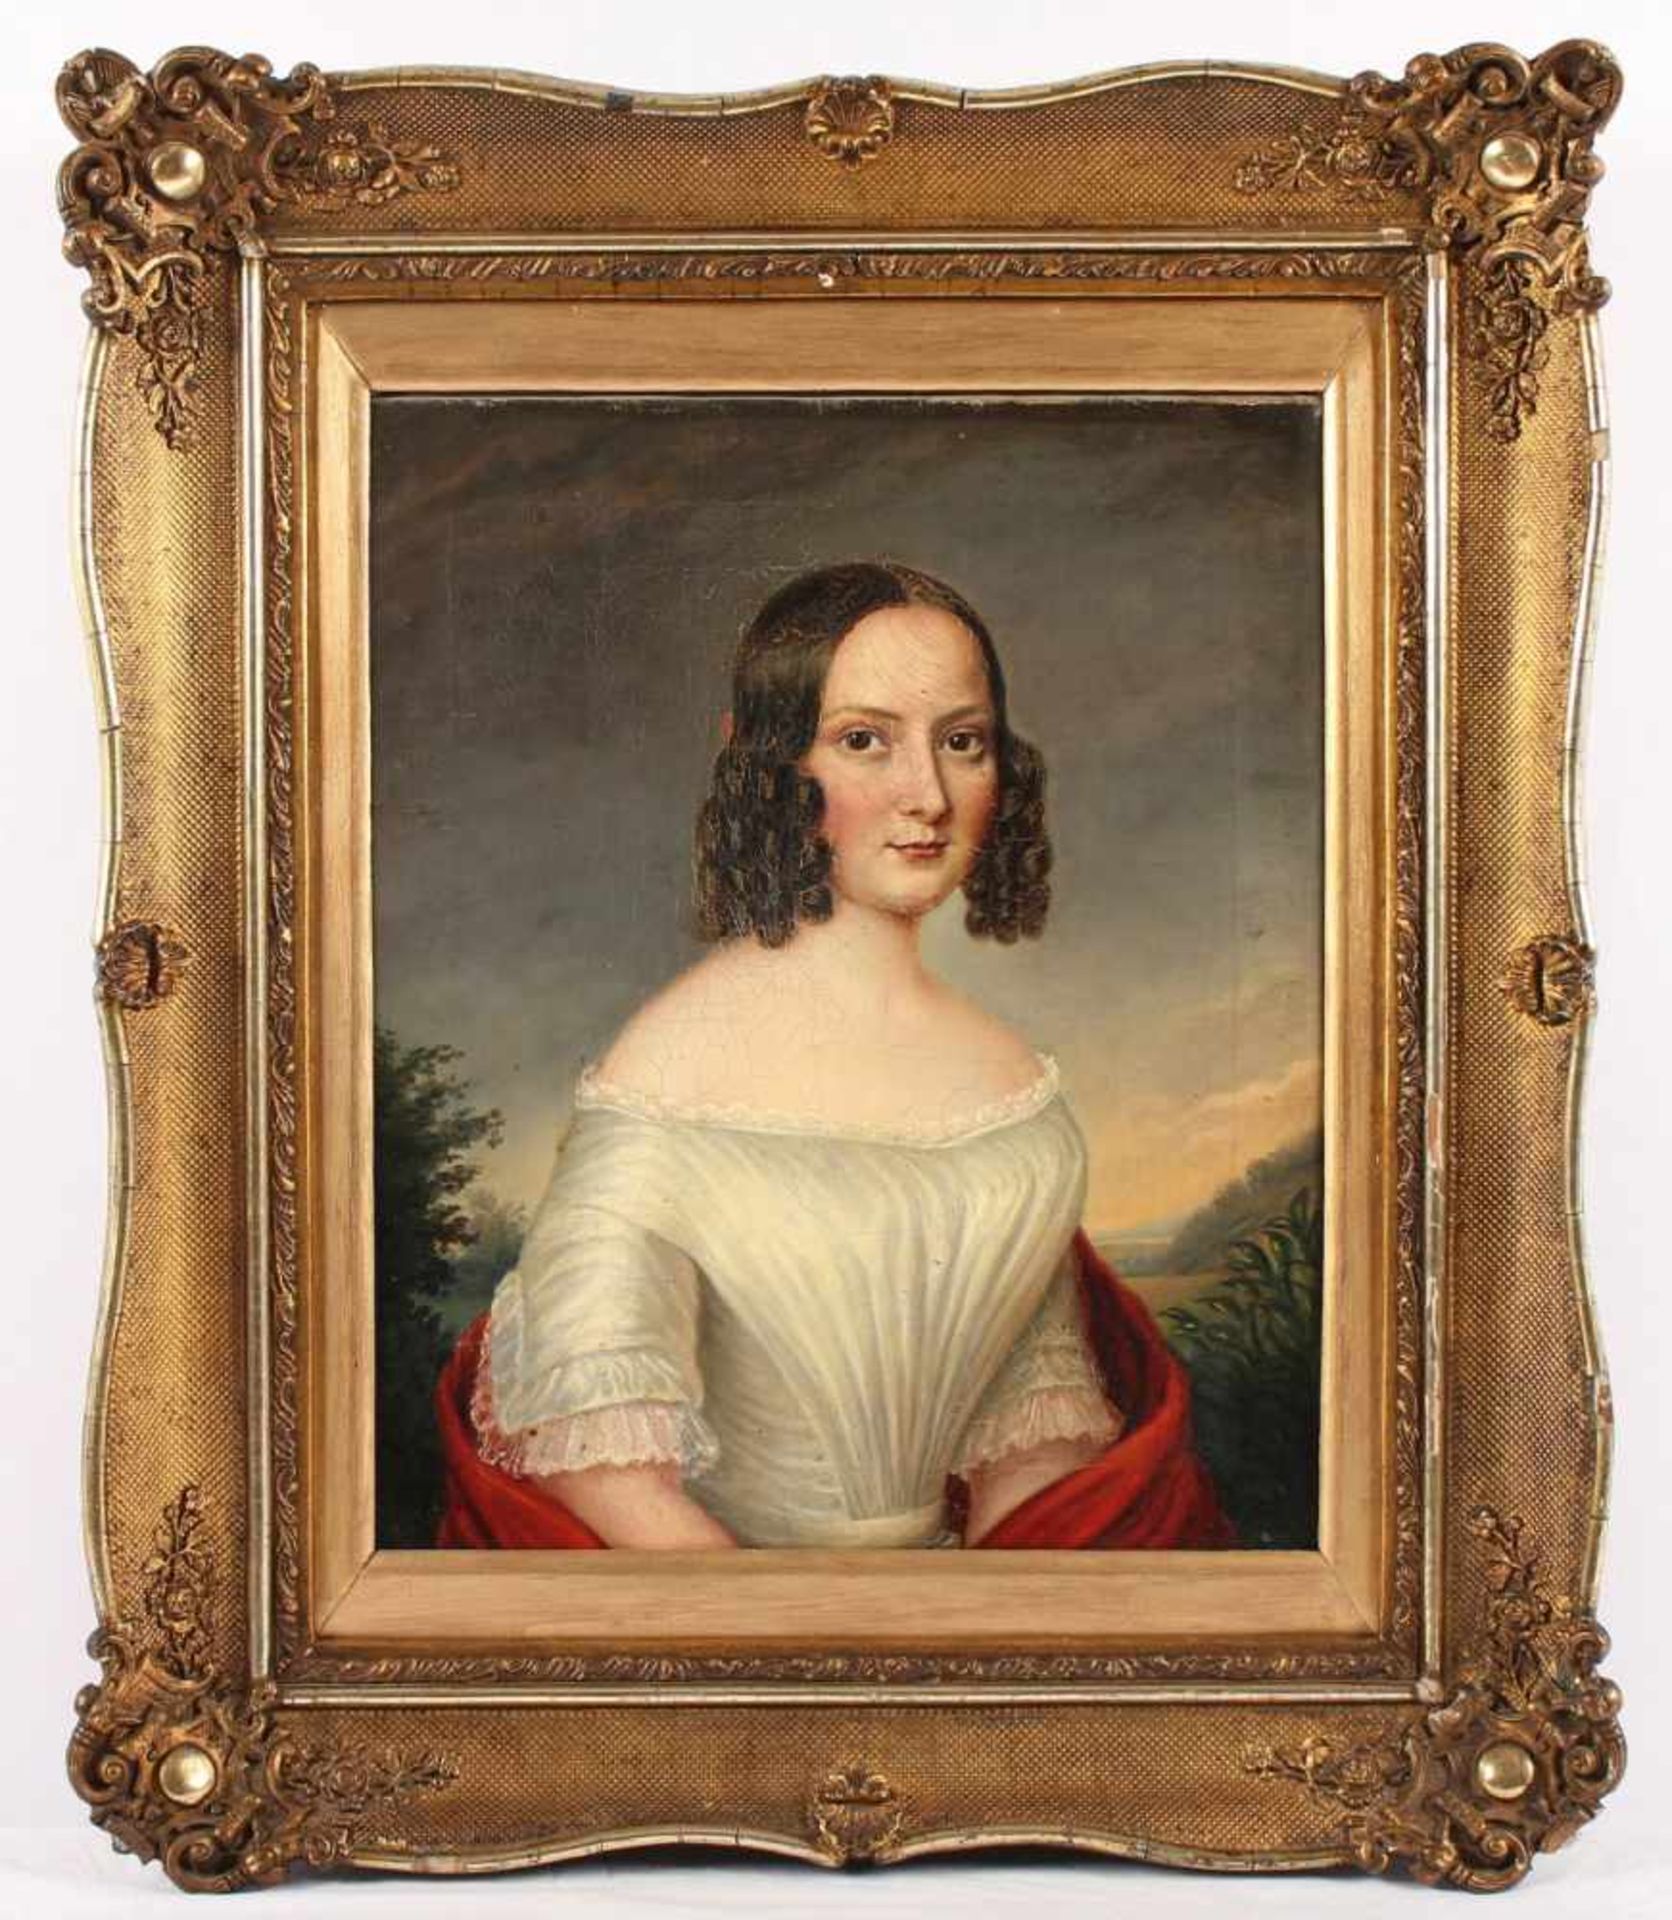 PORTRAITMALER UM 1840, "Bildnis einer jungen Frau", Öl/Lwd., 44 x 37, besch., R.- - -22.00 % buyer's